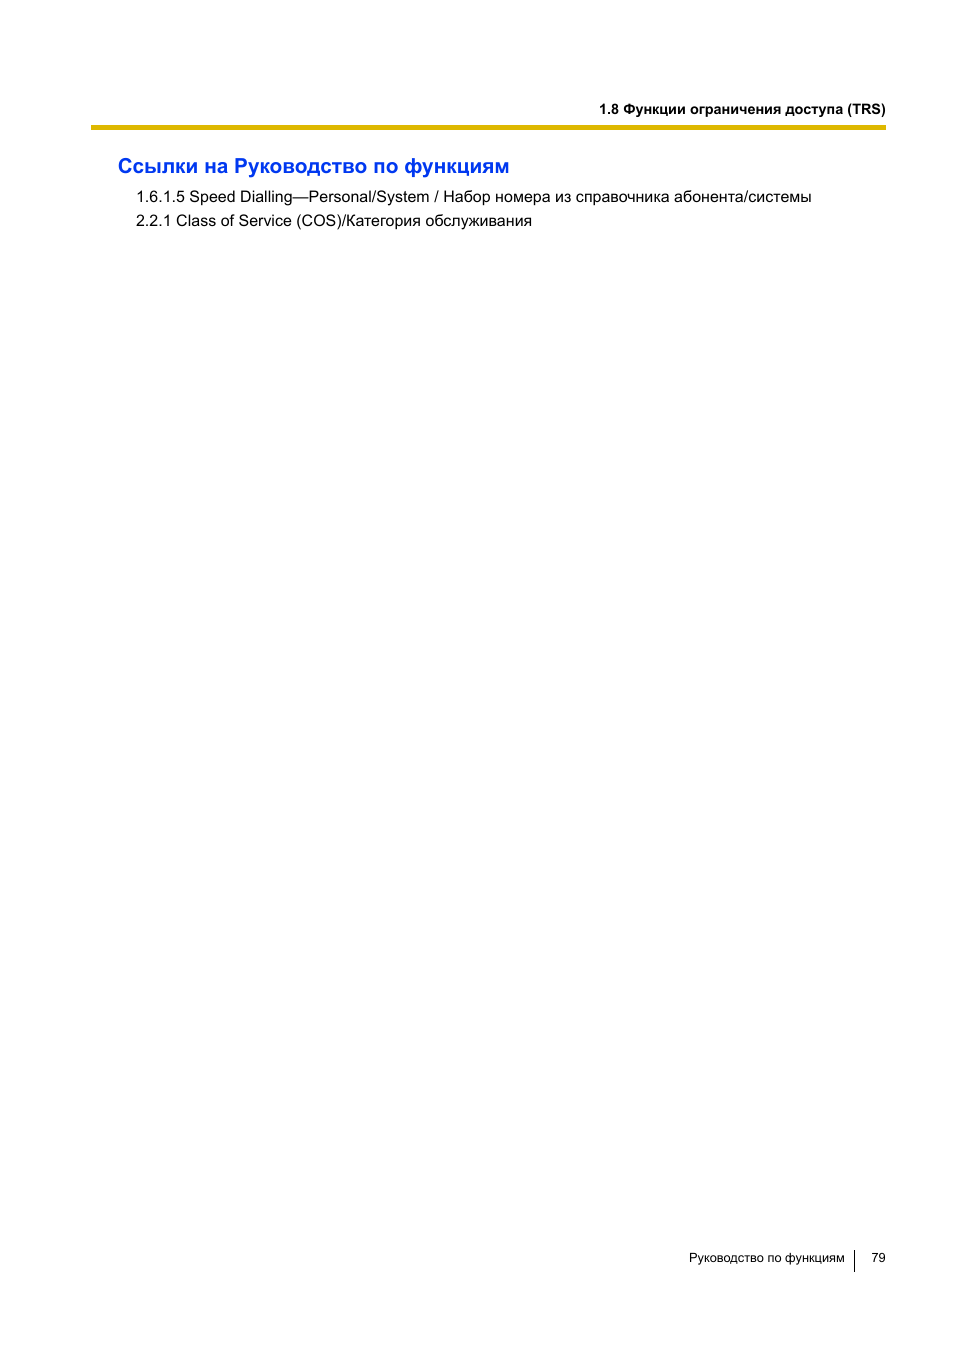 Ссылки на руководство по функциям | Инструкция по эксплуатации Panasonic KX-TEA308RU | Страница 79 / 318